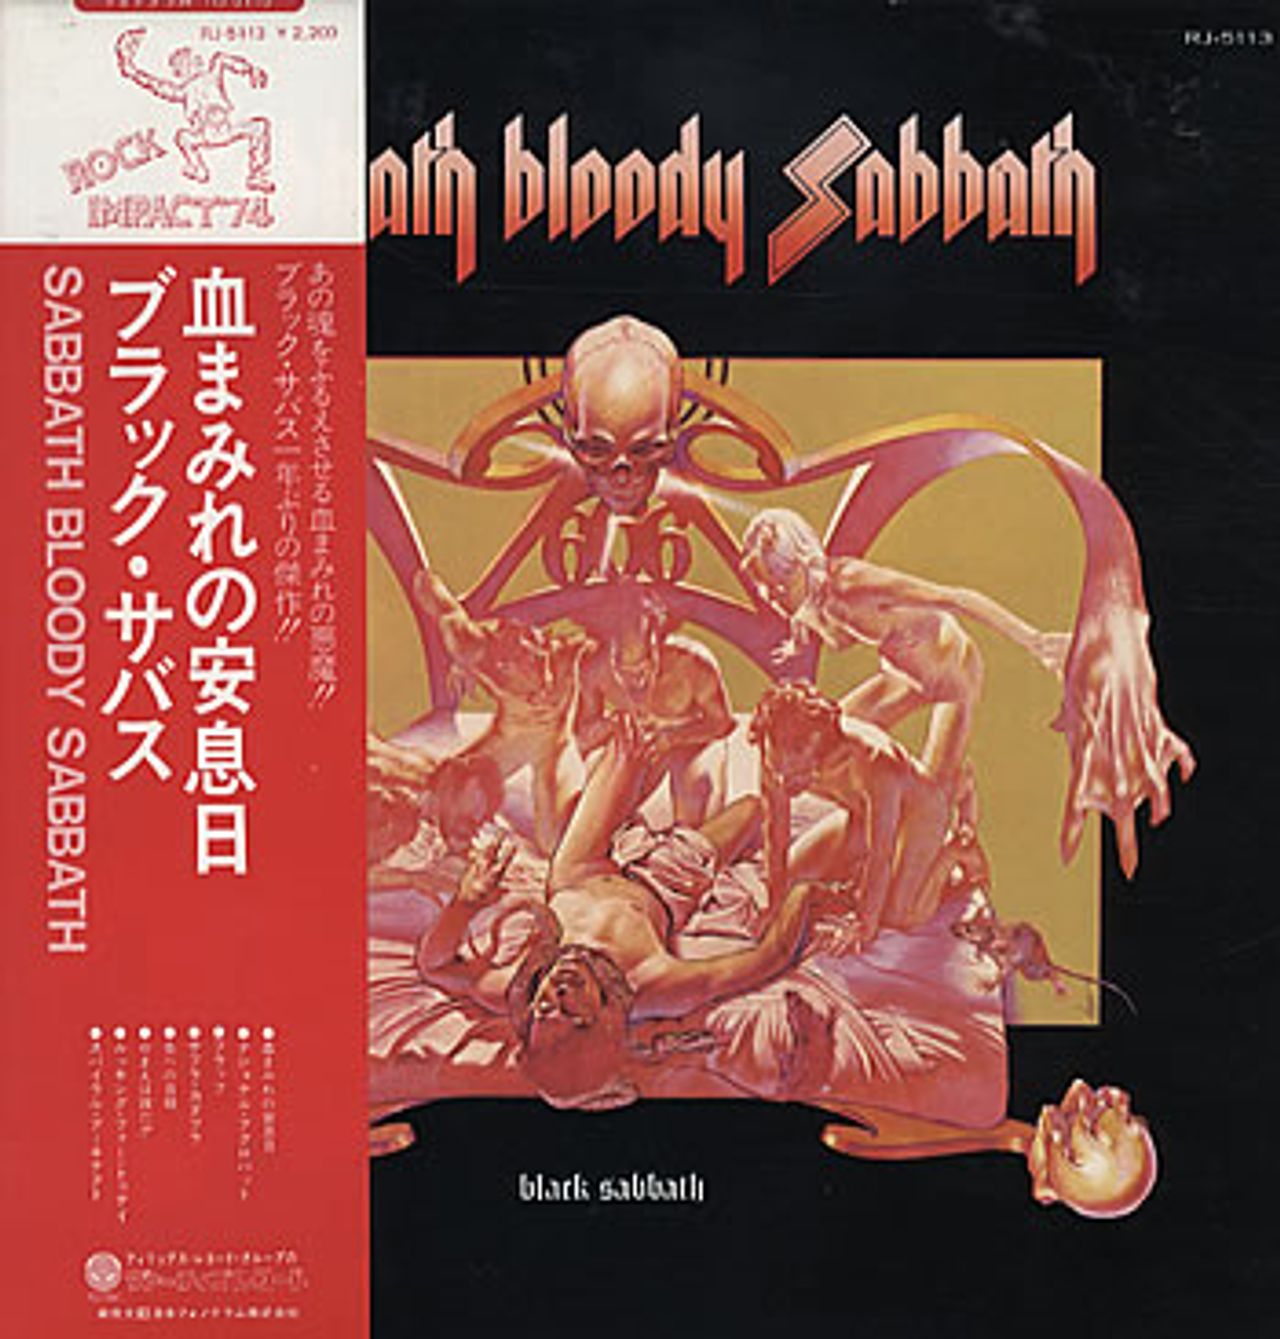 Black Sabbath Sabbath Bloody Sabbath + Obi Japanese Vinyl LP